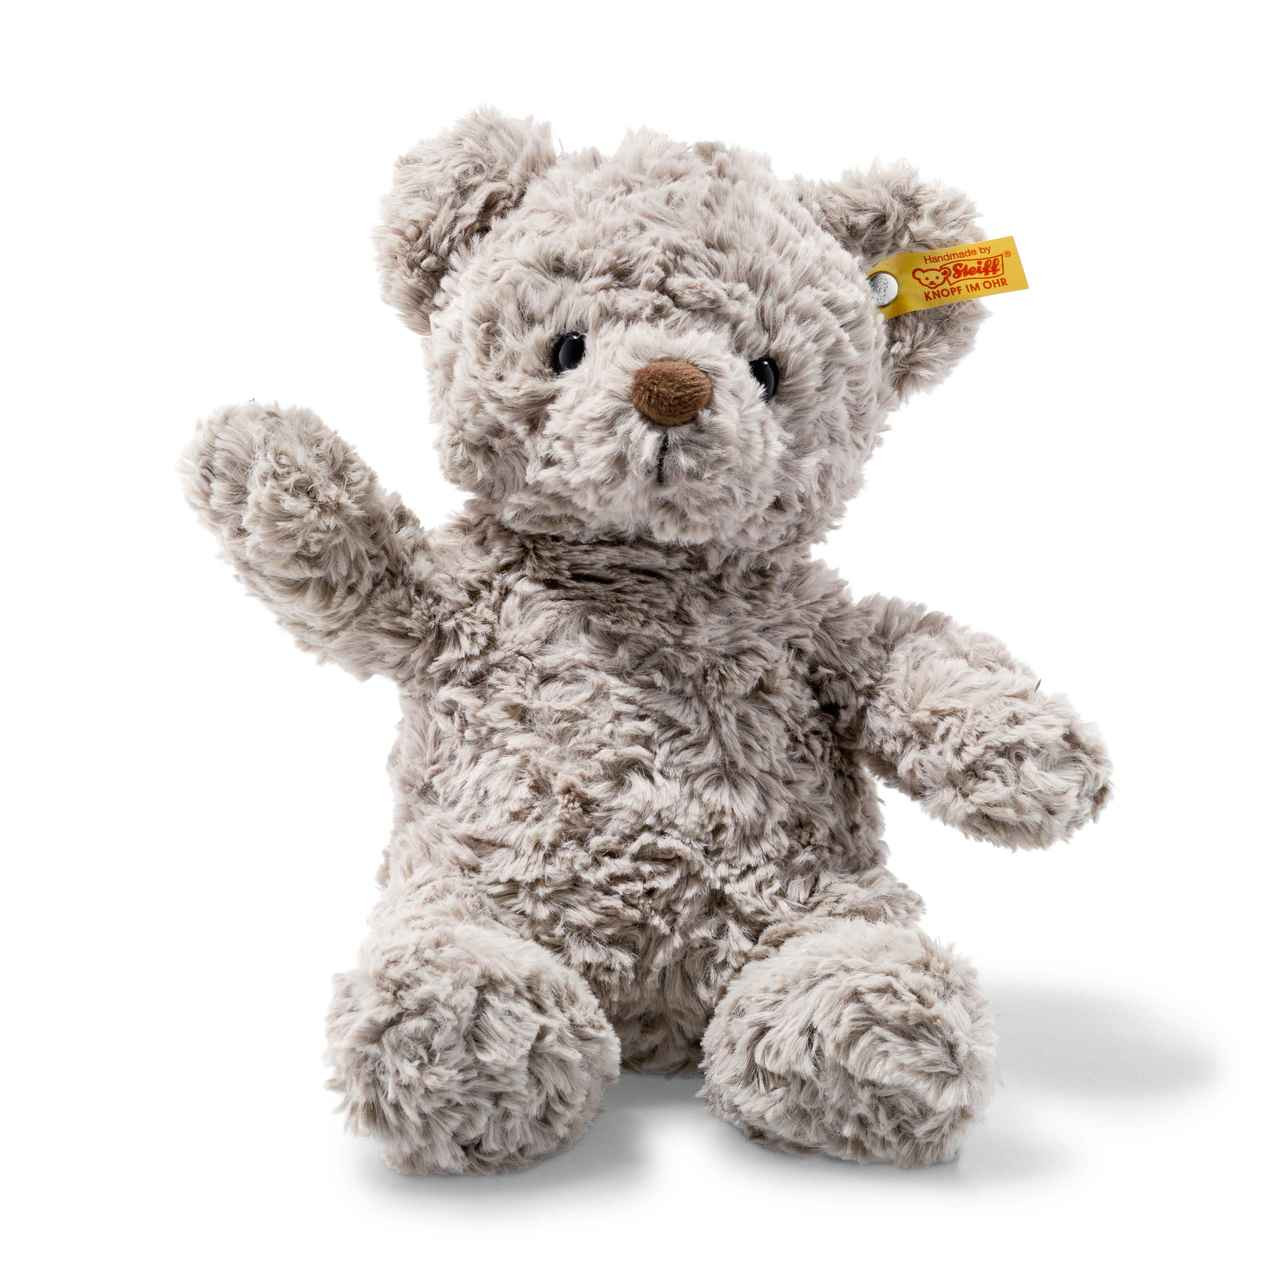 STEIFF Honey teddy bear EAN 113420 28cm Grey soft toy Plush gift New 